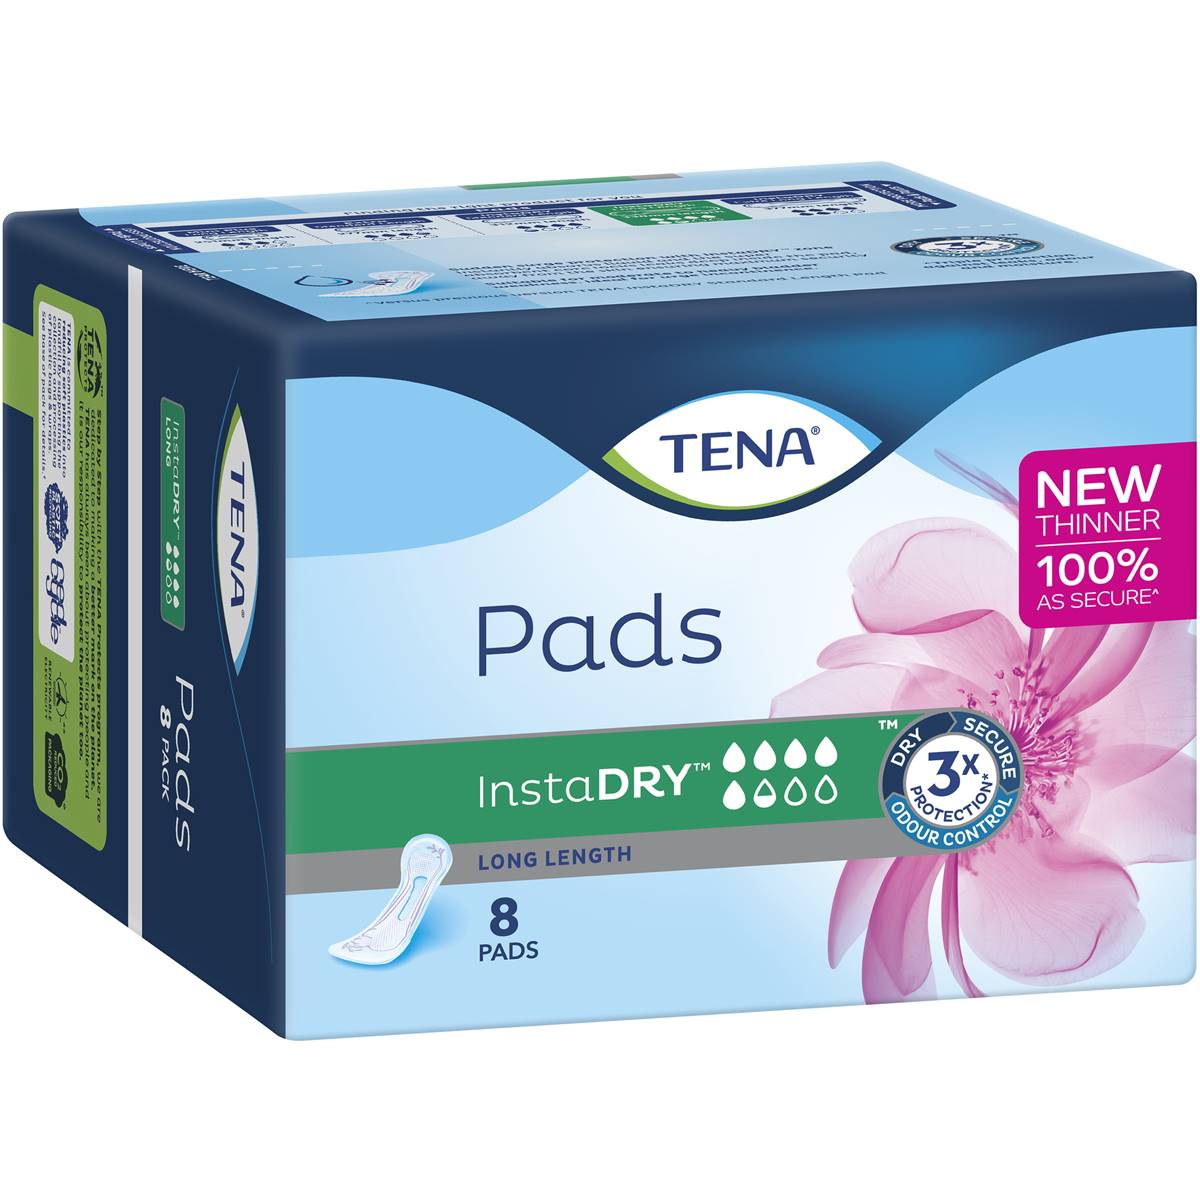 Tena Pads Instadry Long Length 8 Pack